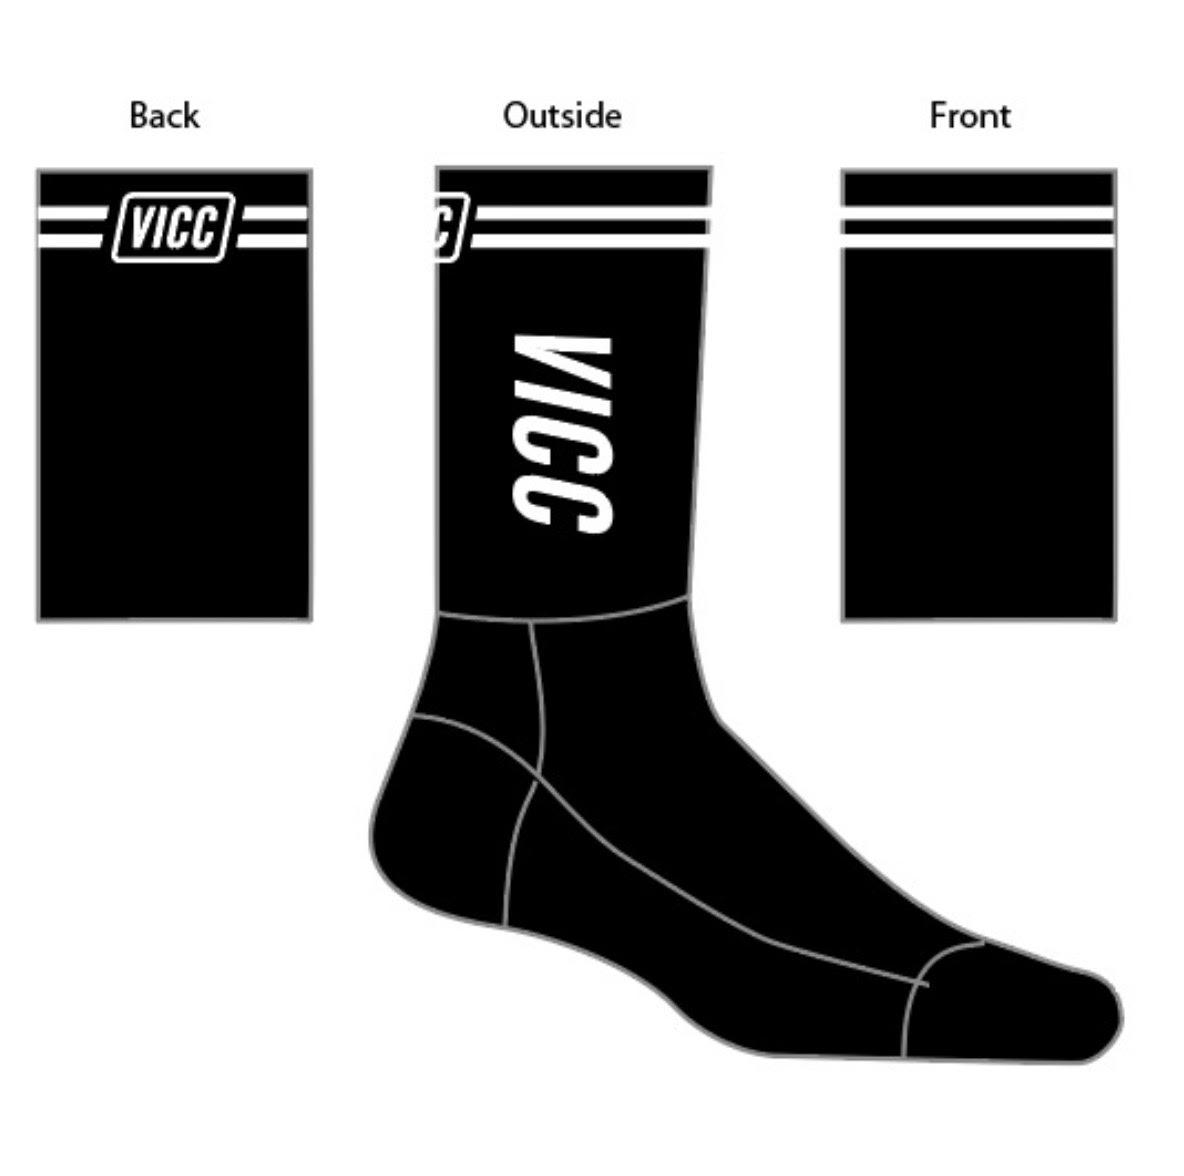 VICC Socks